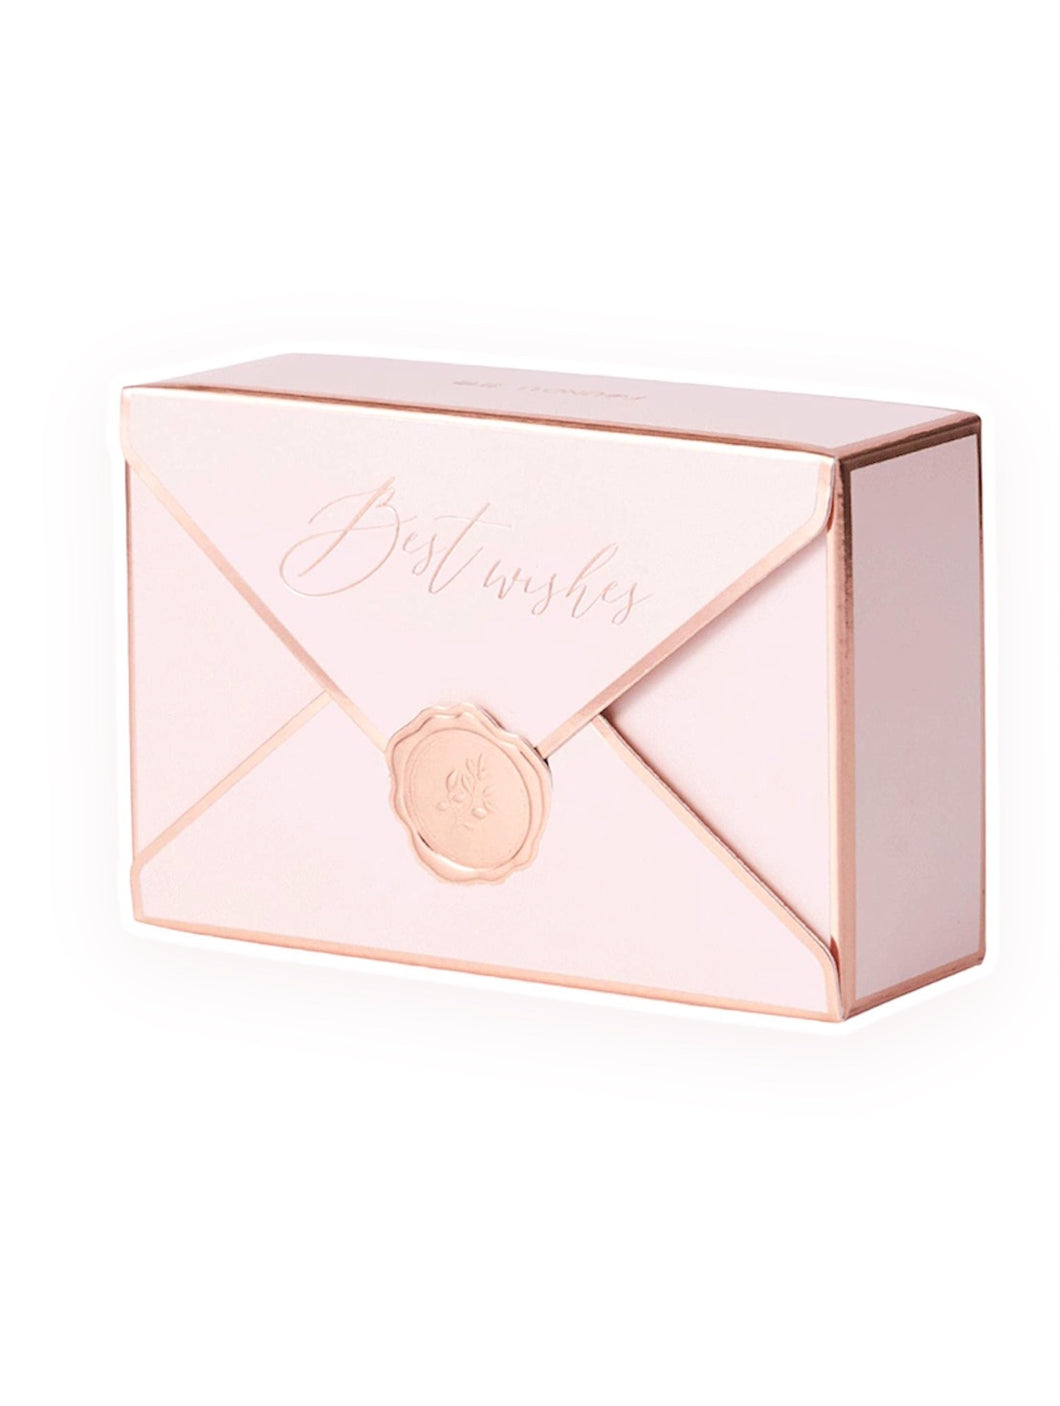 Envelope Shape Gift Box